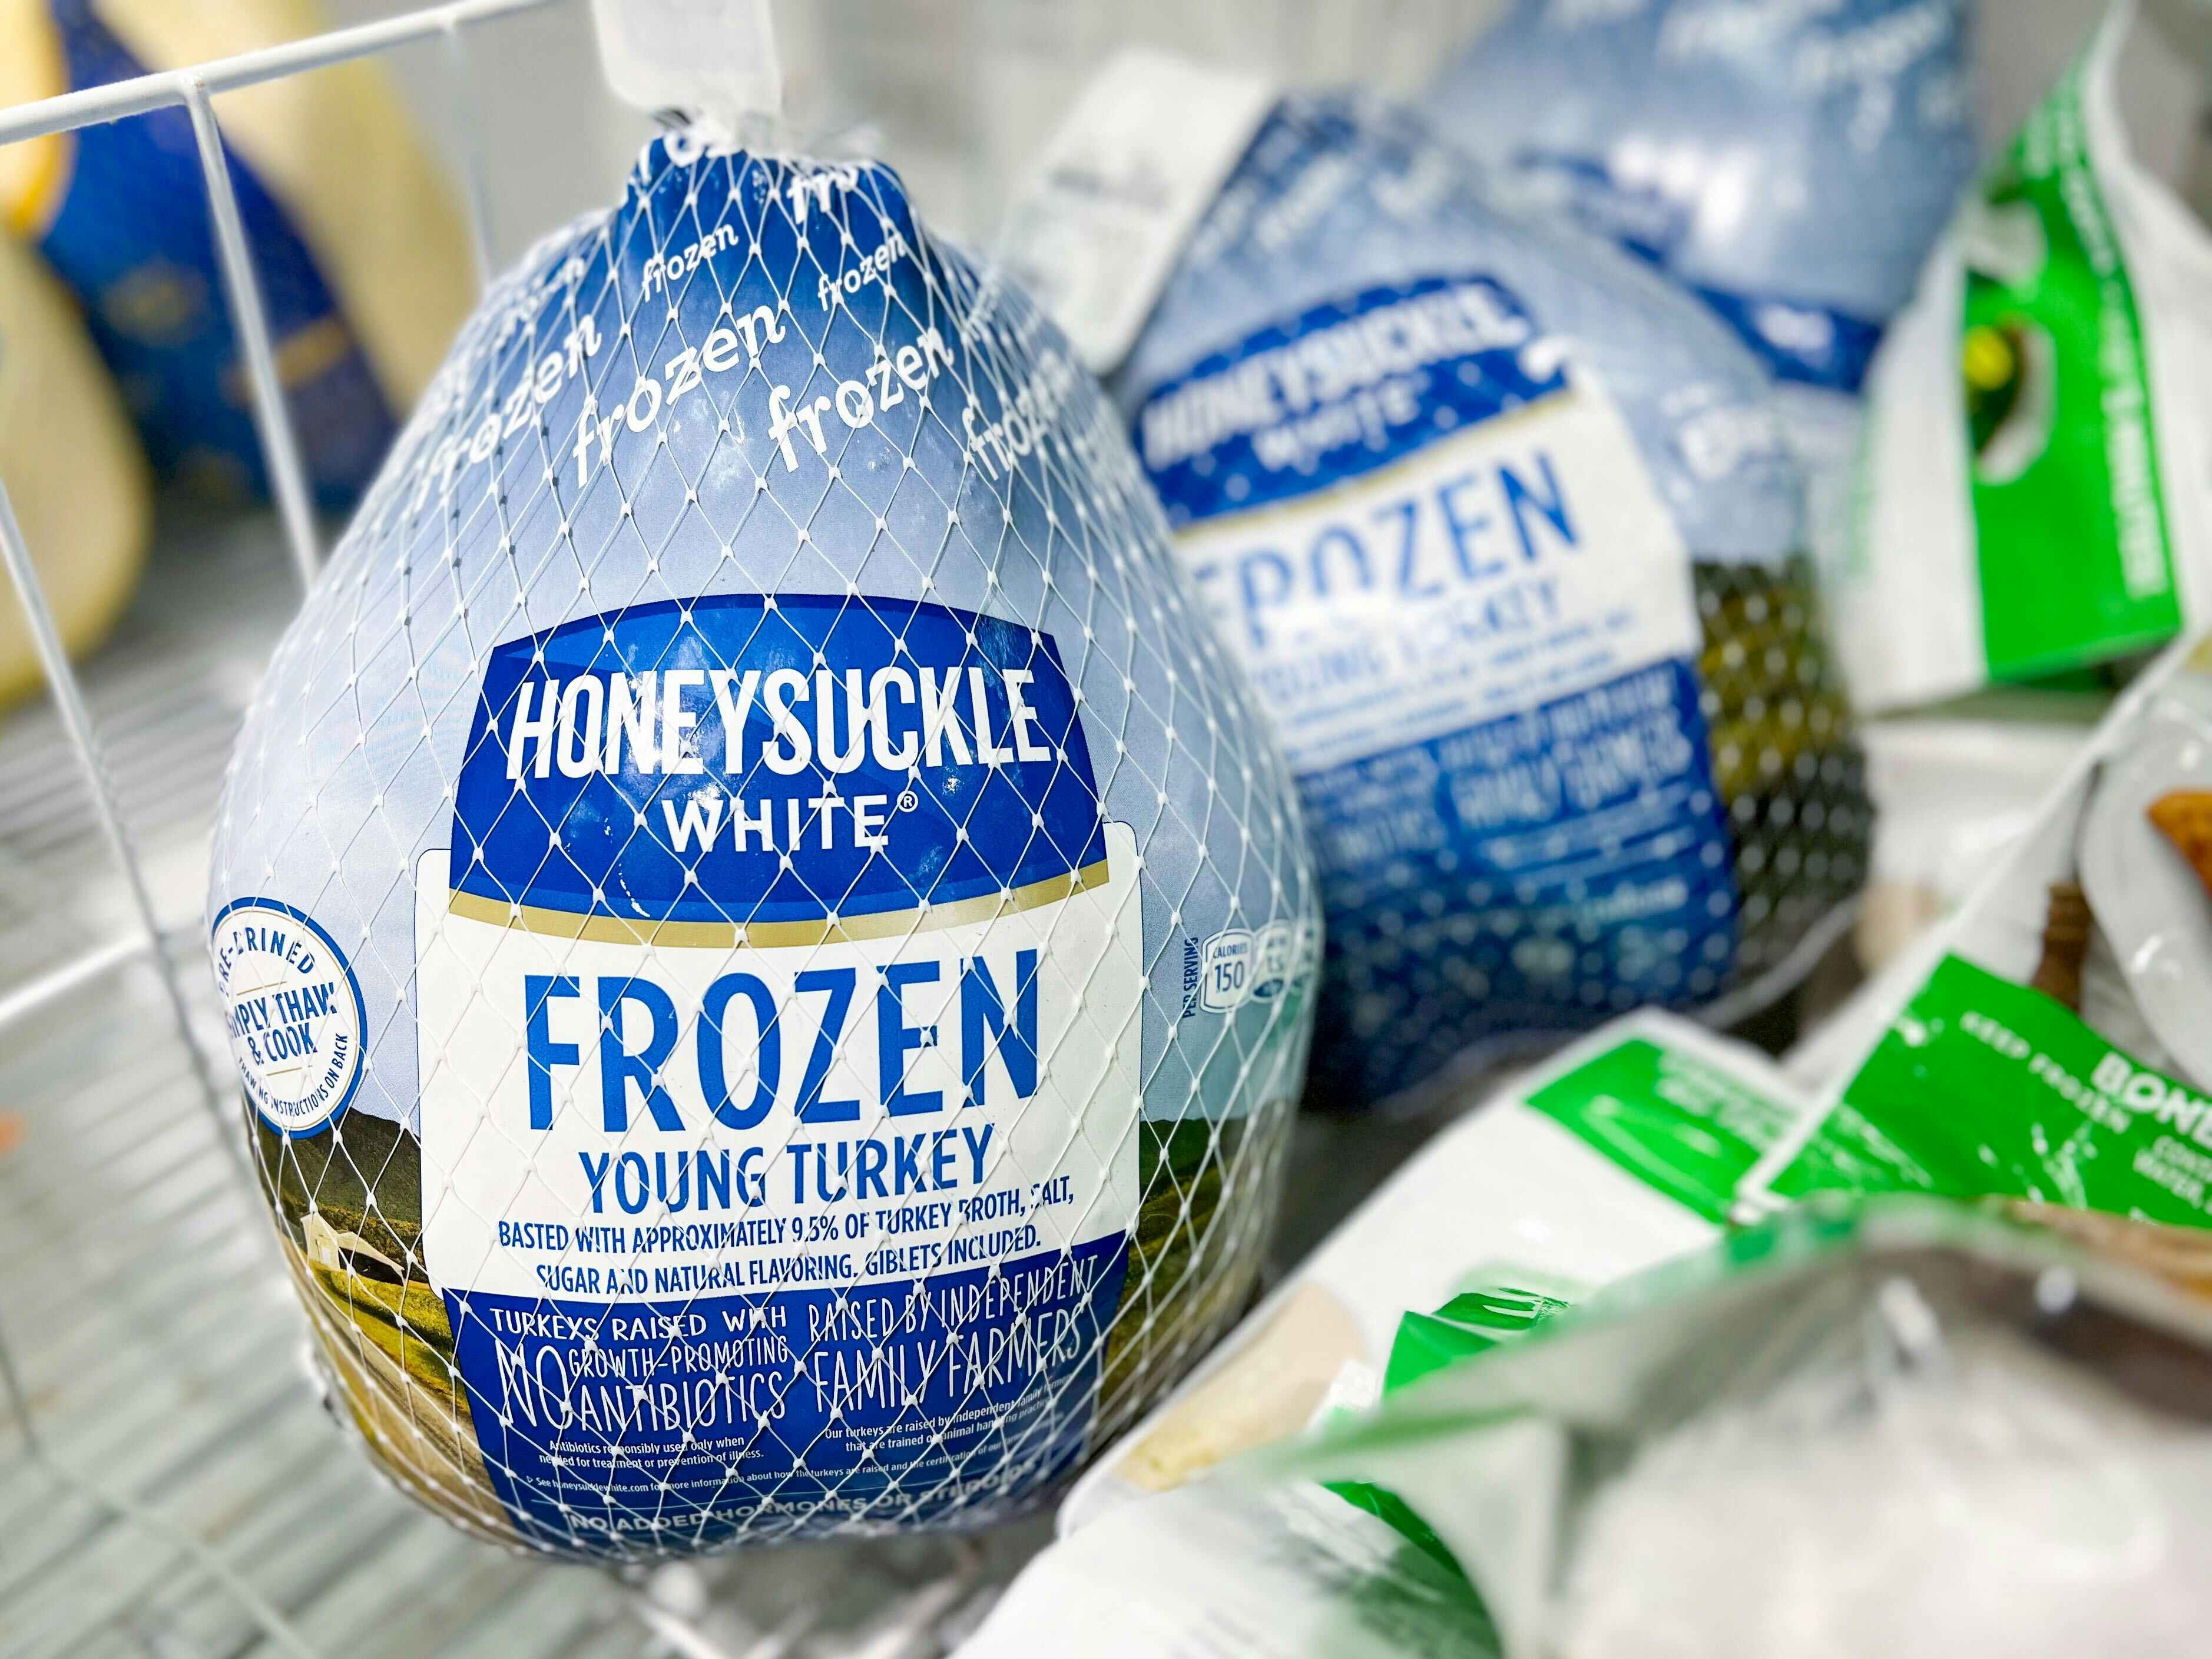 Target Honeysuckle Frozen Turkey 11:14:23 -3